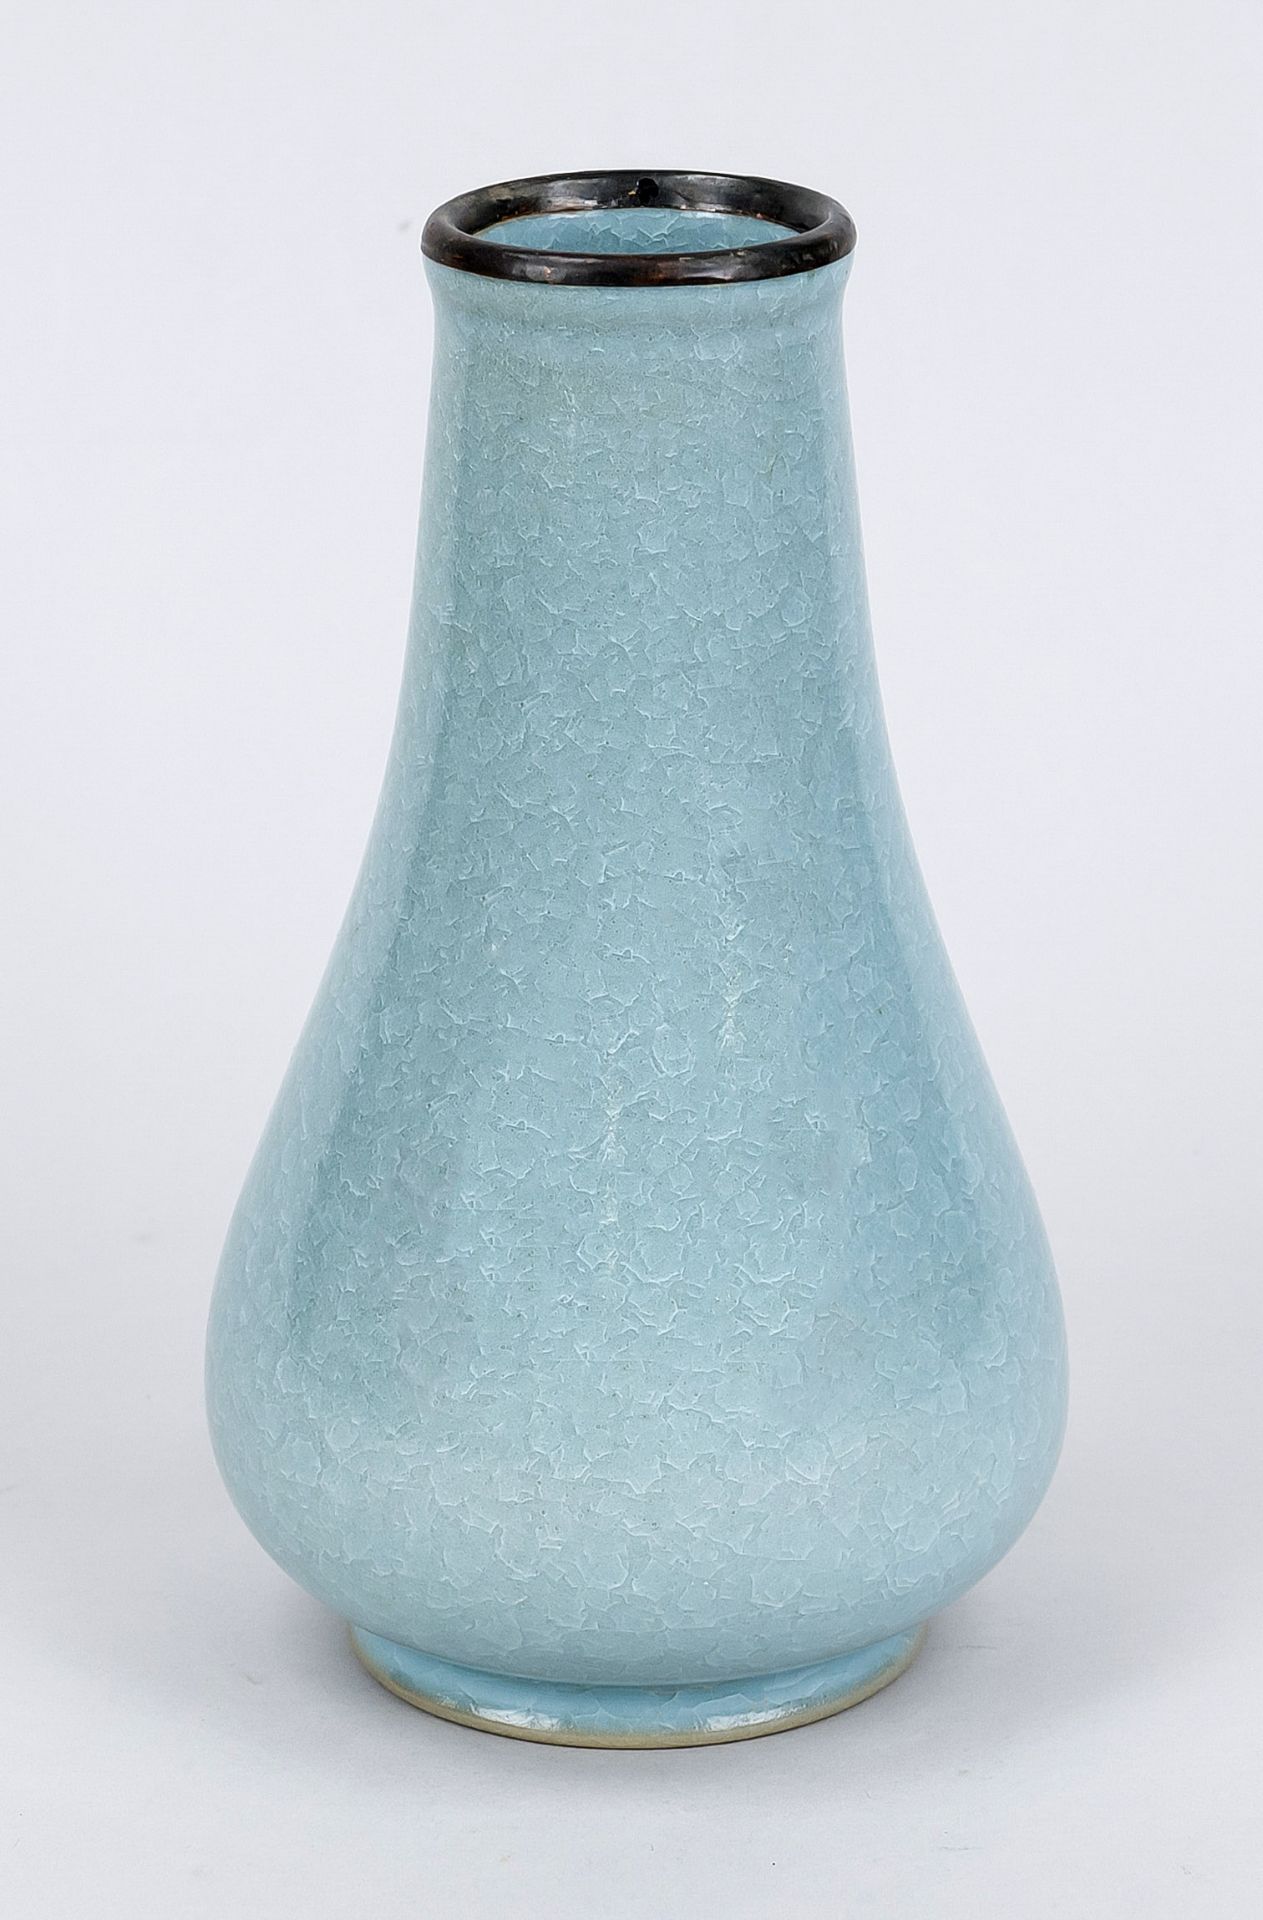 Monochrome Ru-type vase, China 20th century, bottle vase with wide neck, lip rim with metal